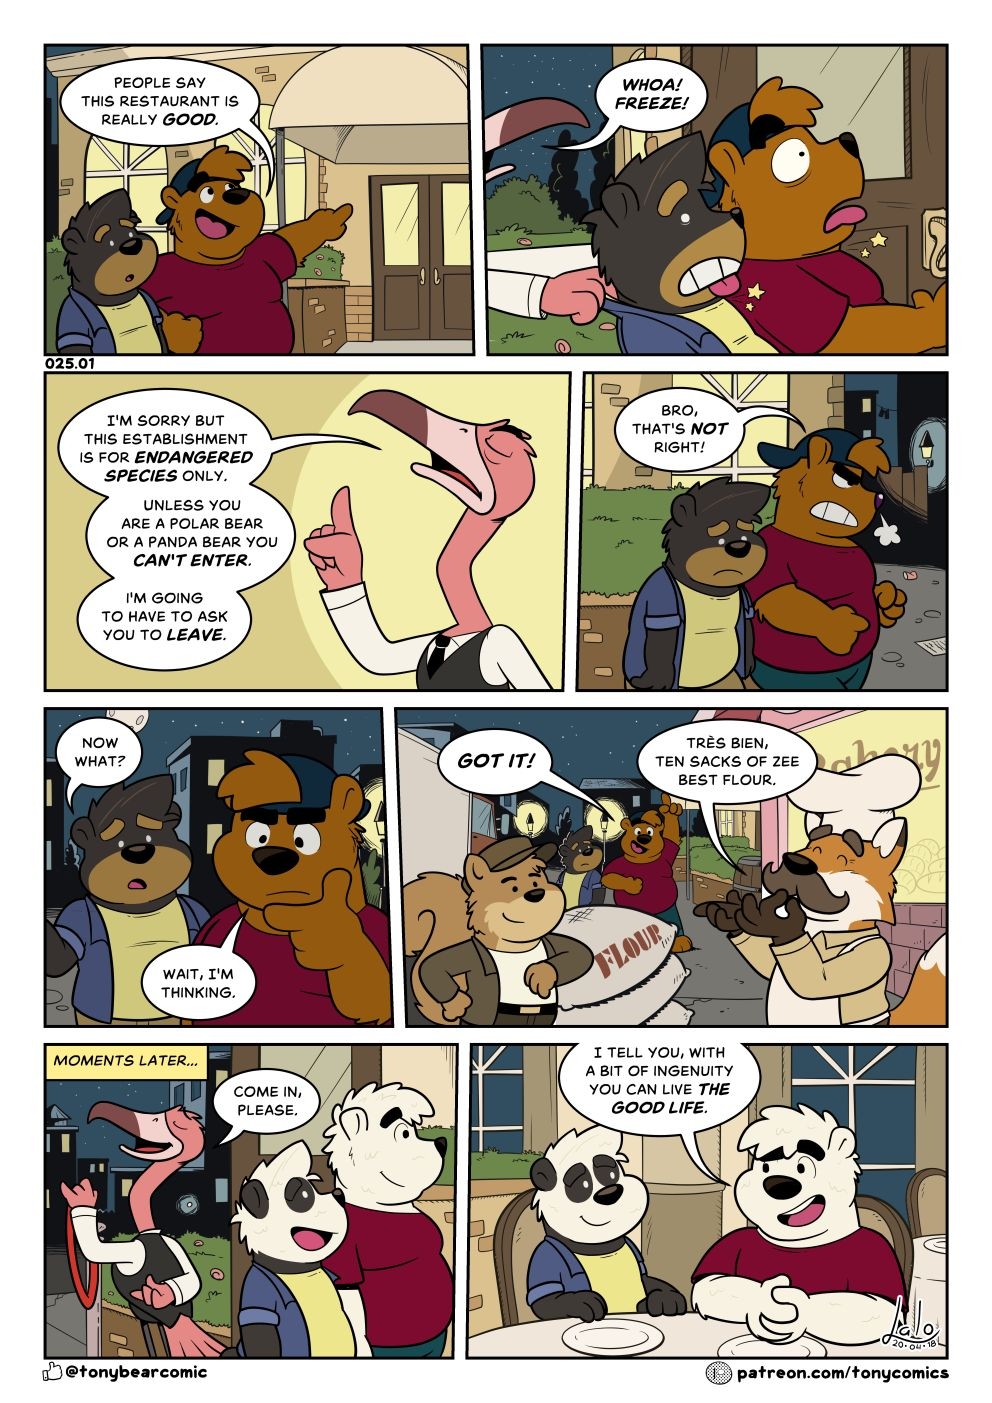 [FurryDude88] Tony Comics [On Going] 122